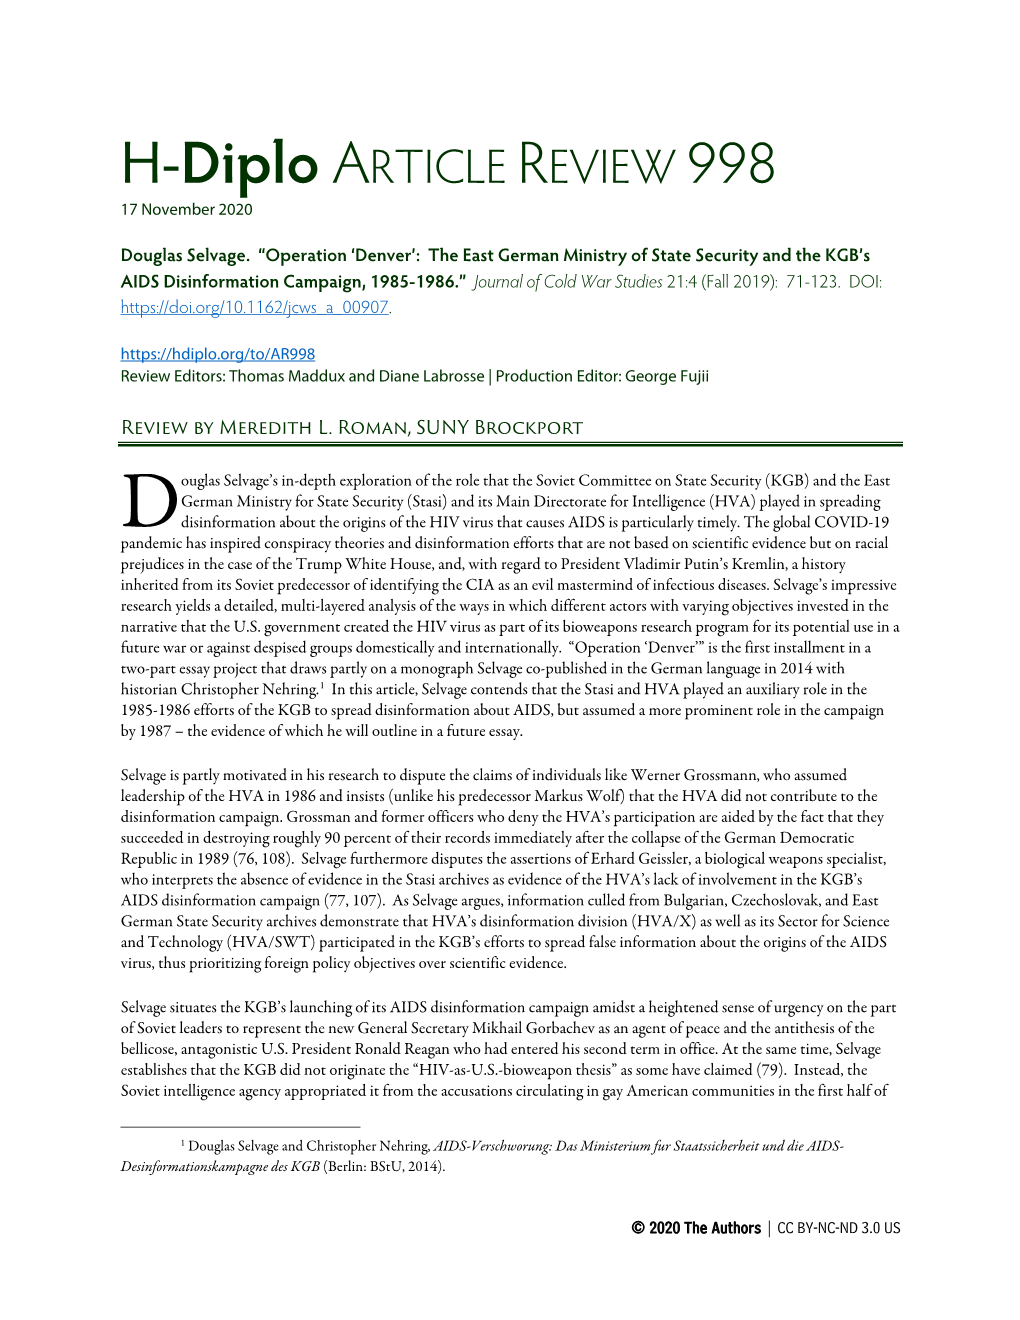 H-Diplo ARTICLE REVIEW 998 17 November 2020